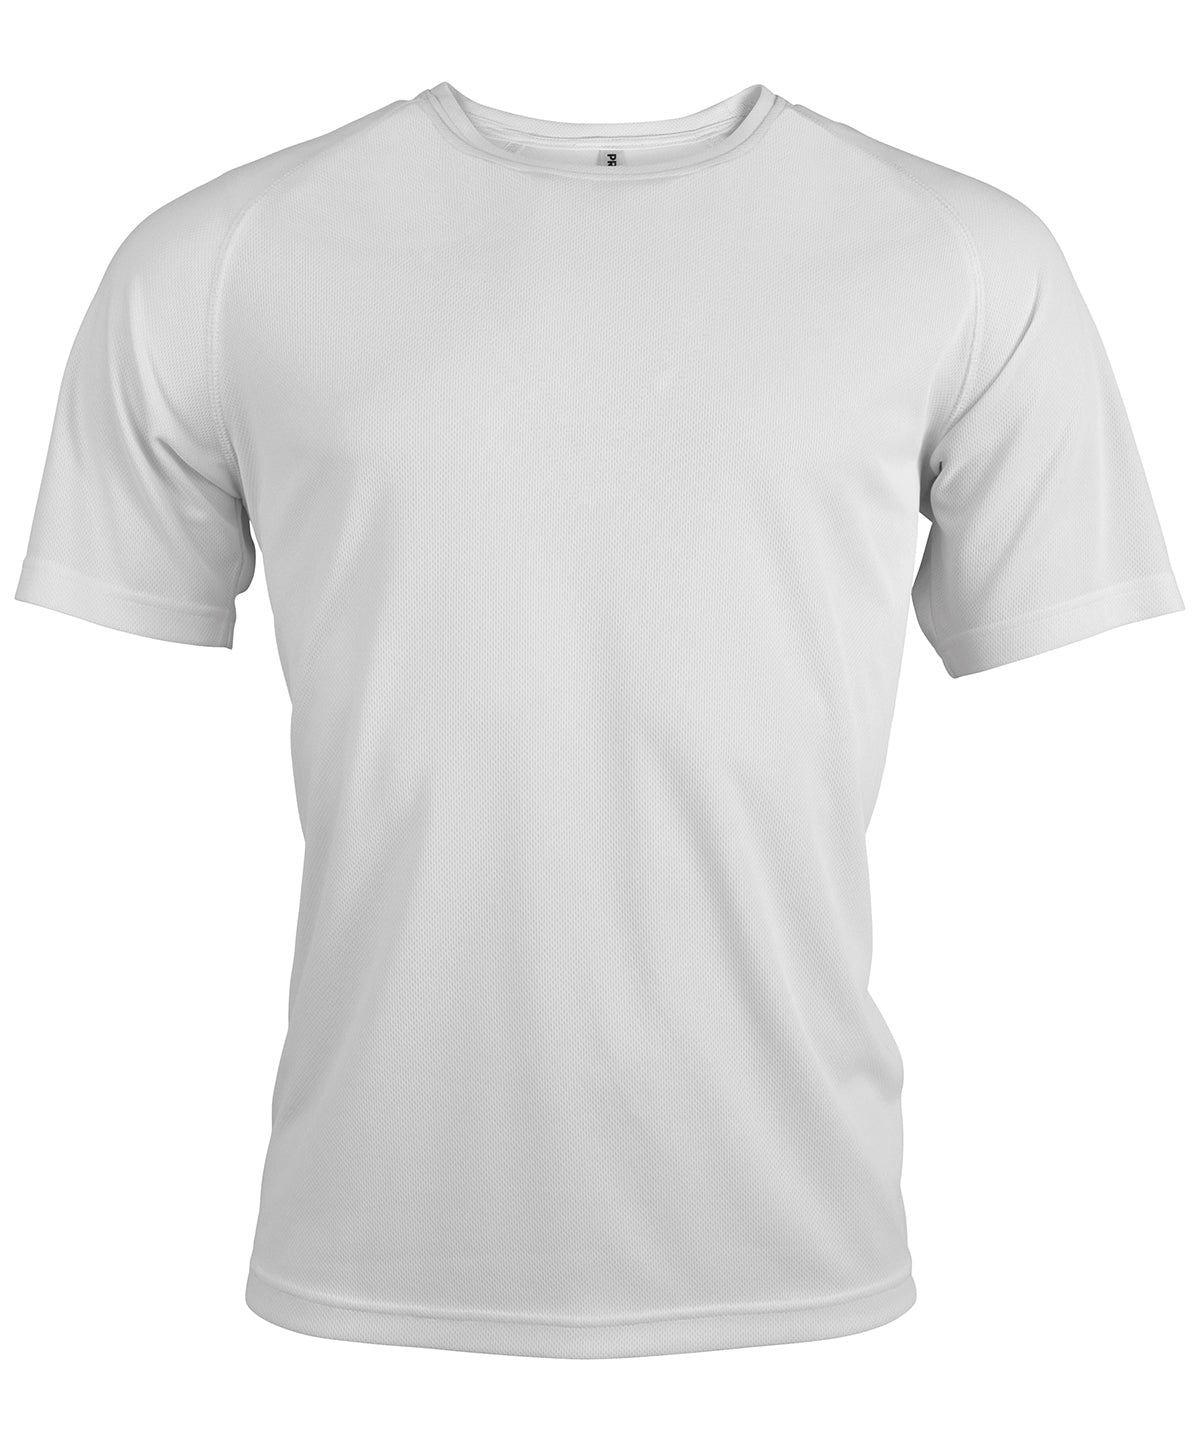 Men's Short-Sleeved Sports T-shirt